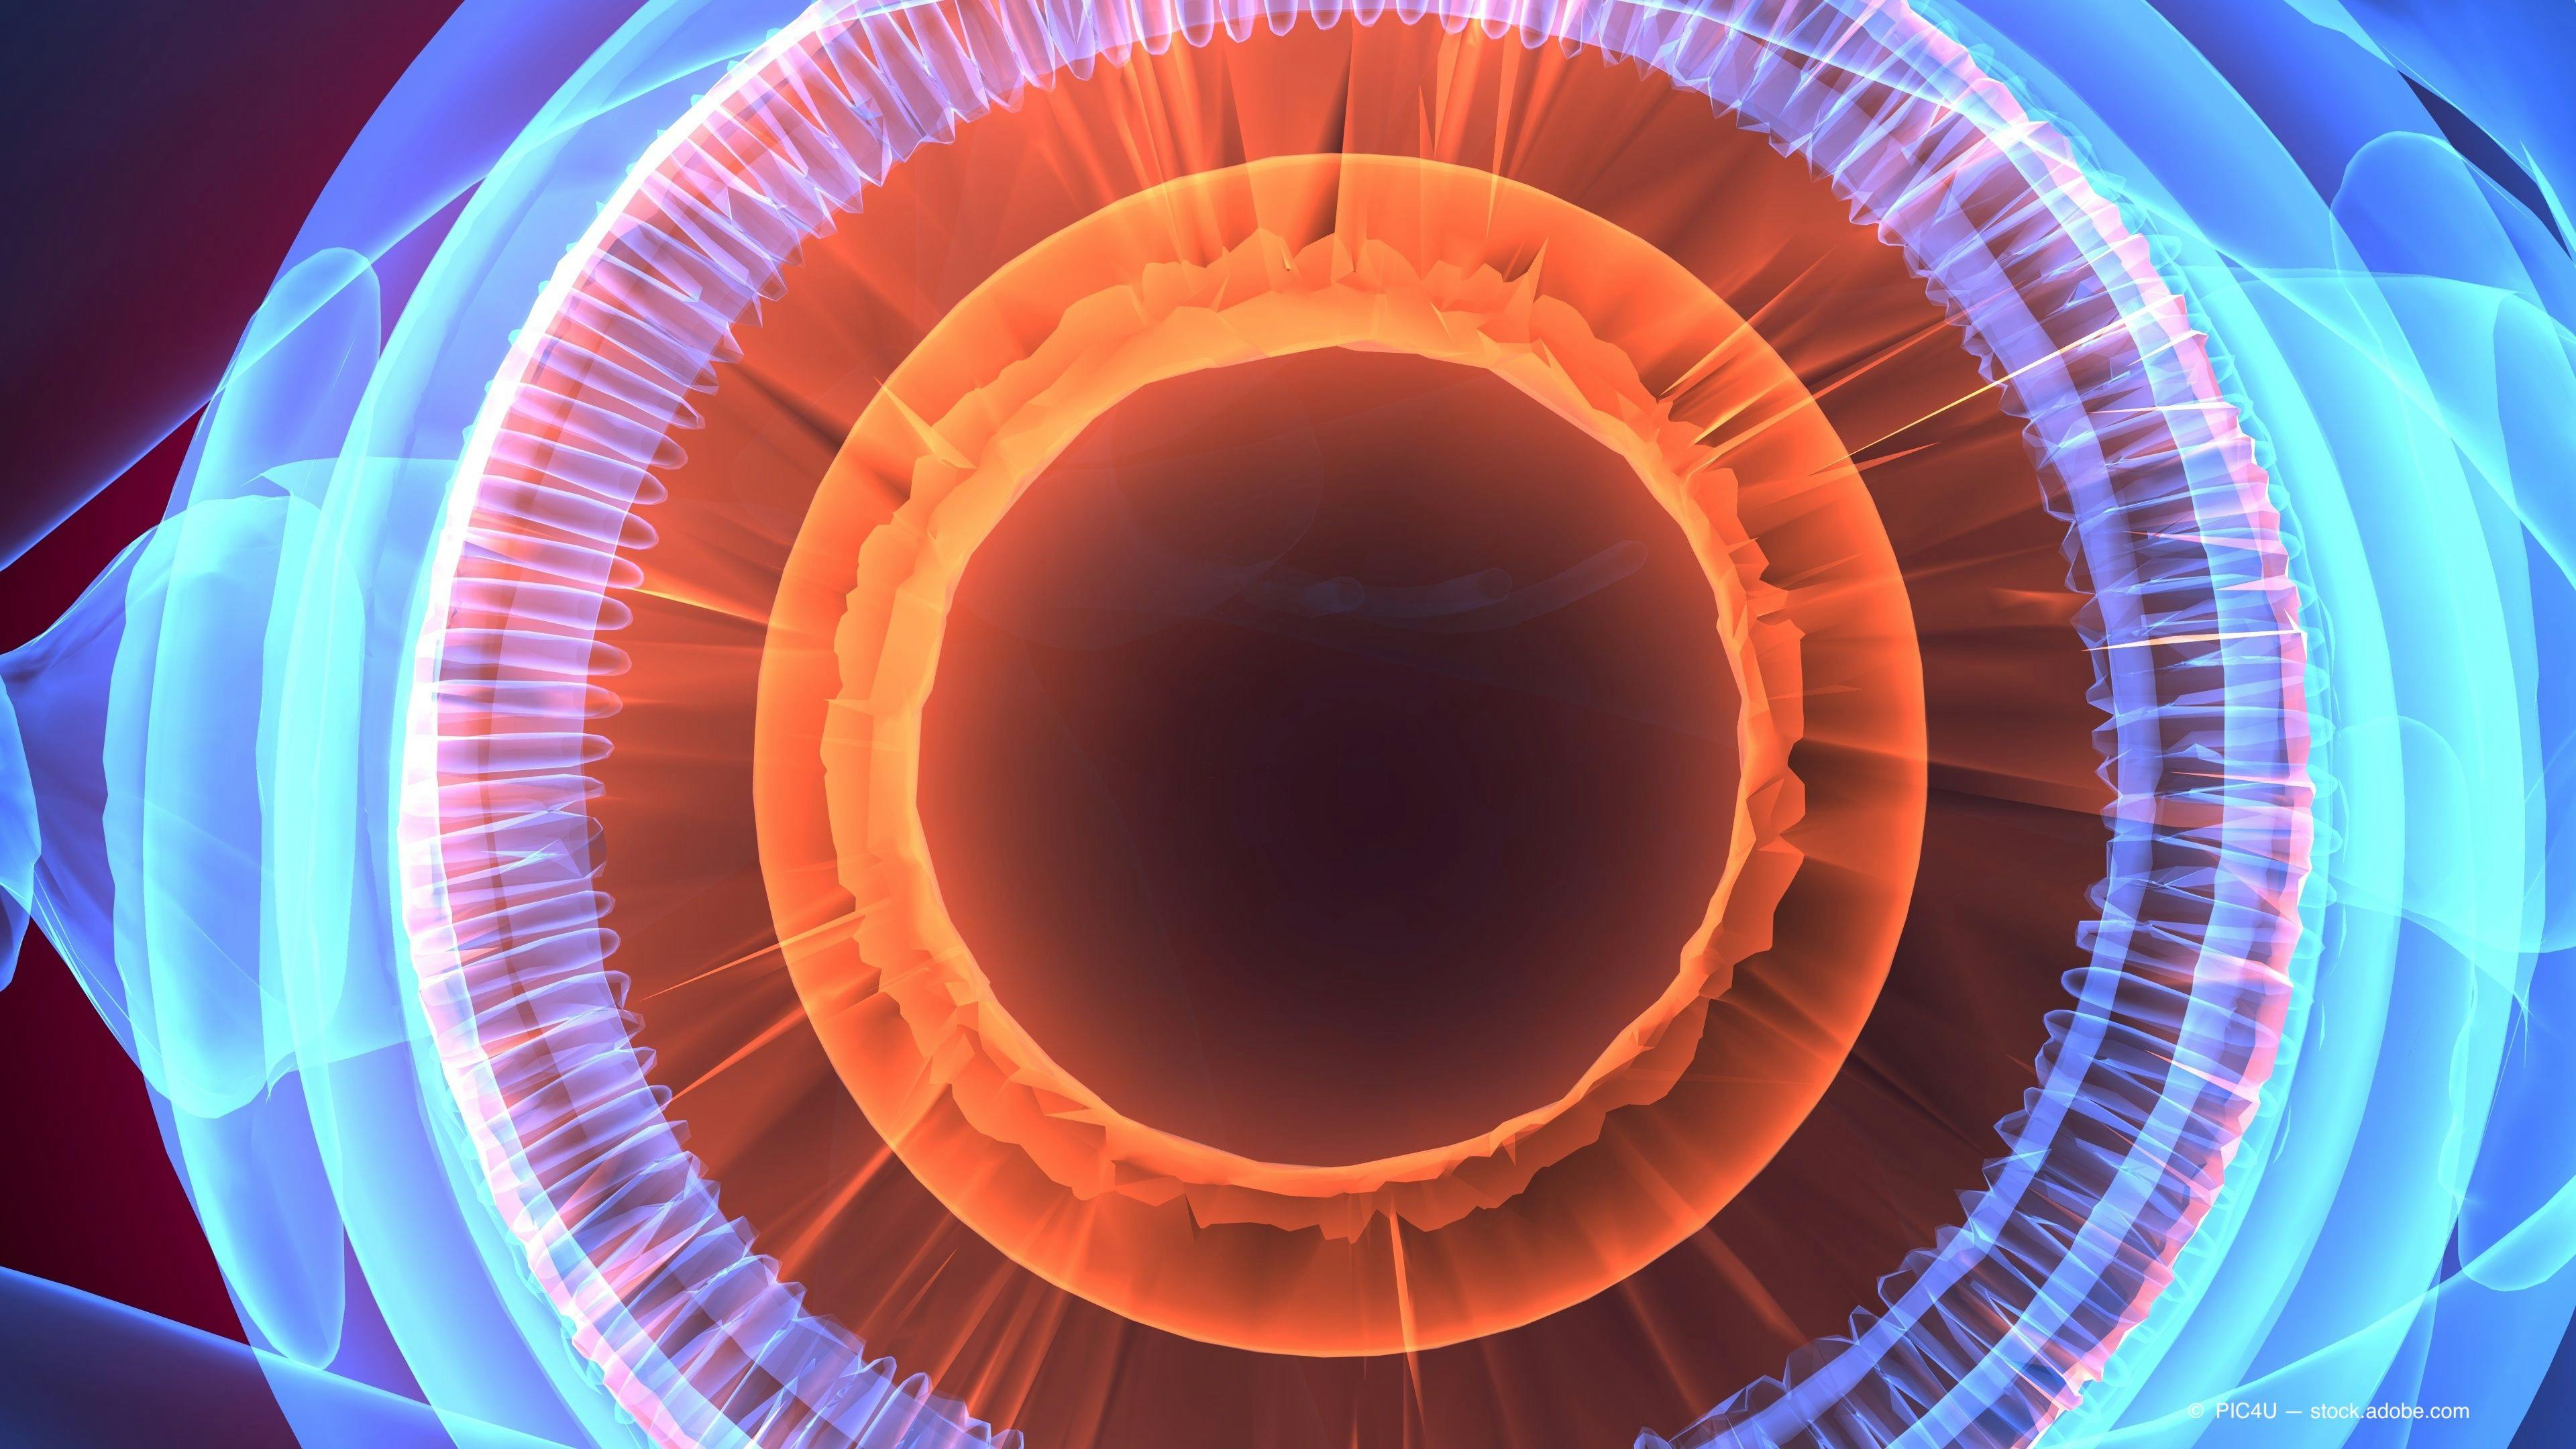 Intra-arterial tissue plasminogen activator could help prevent vision loss in patients